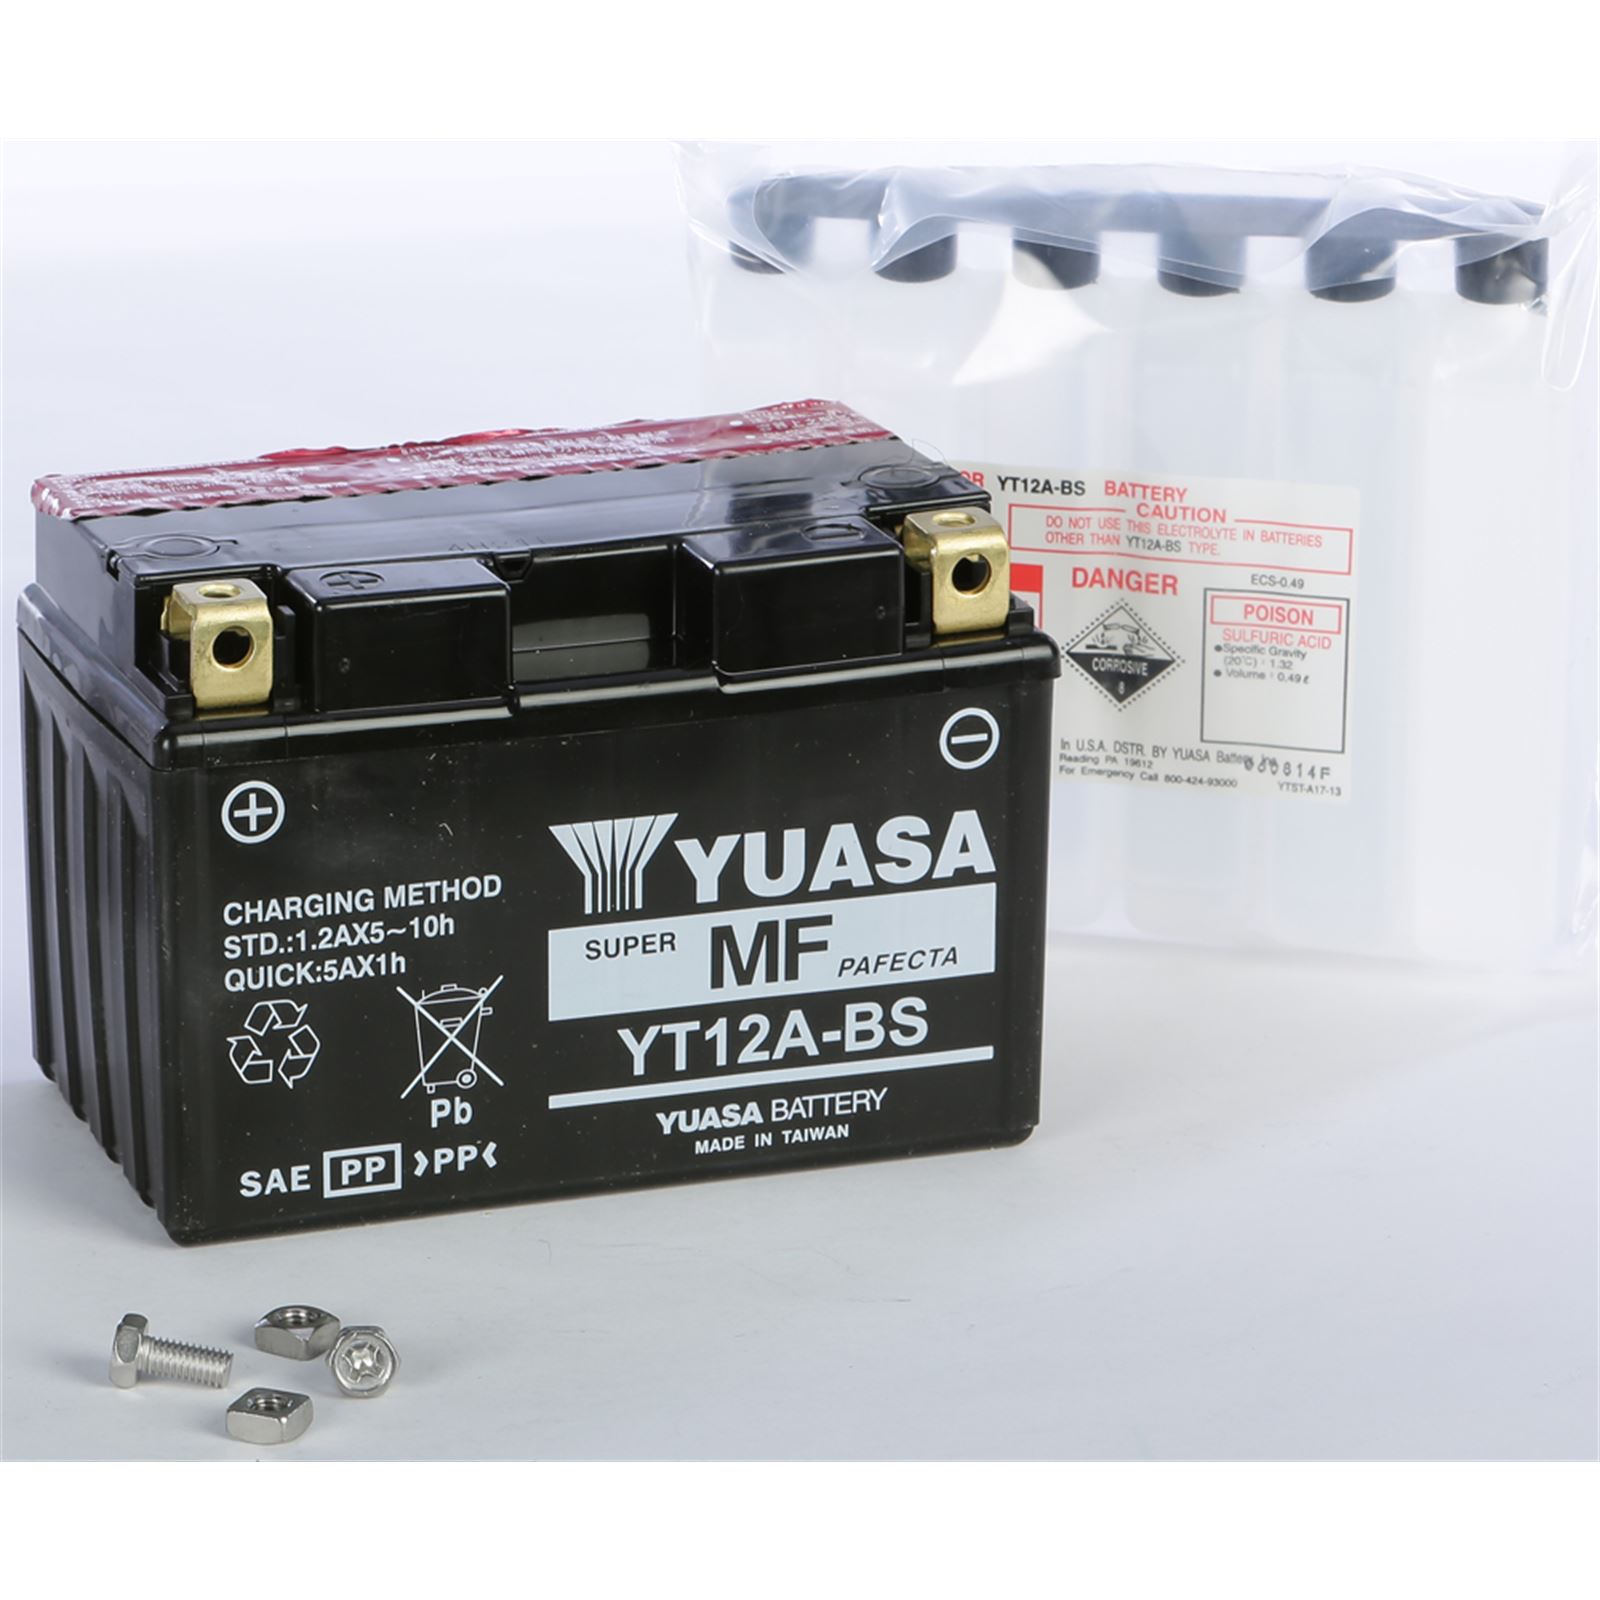 Yuasa Batteries YUAM329BS Yuasa AGM Maintenance-Free Batteries